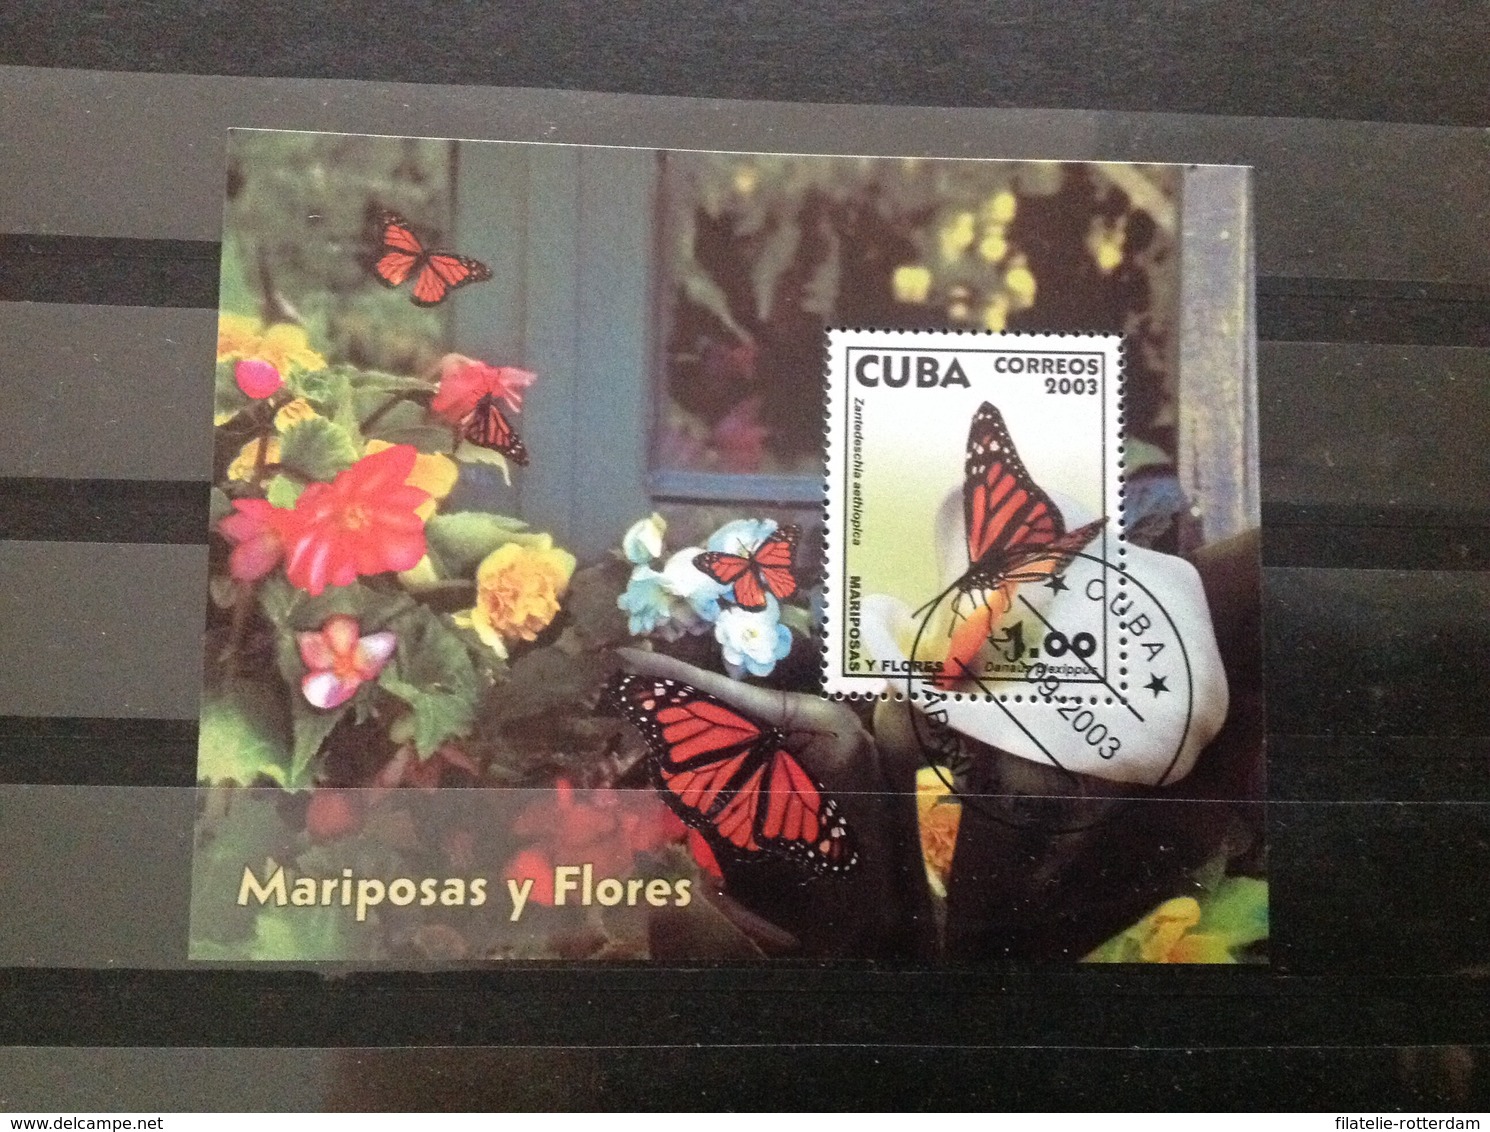 Cuba - Sheet Vlinders (1) 2003 - Used Stamps